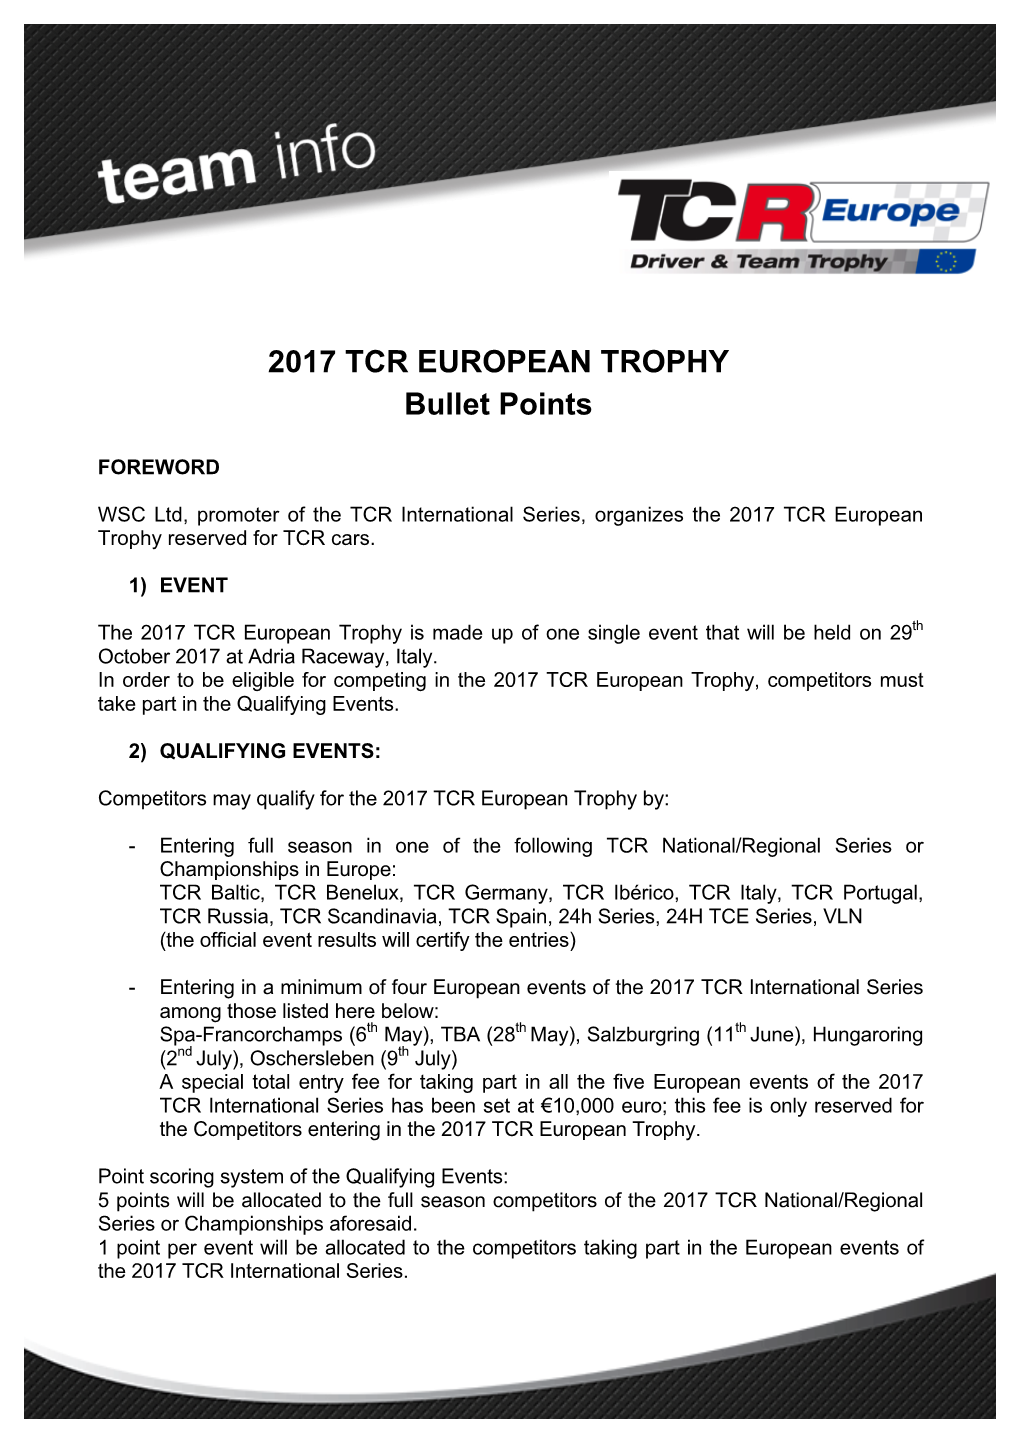 2017 TCR European Trophy Bullet Points